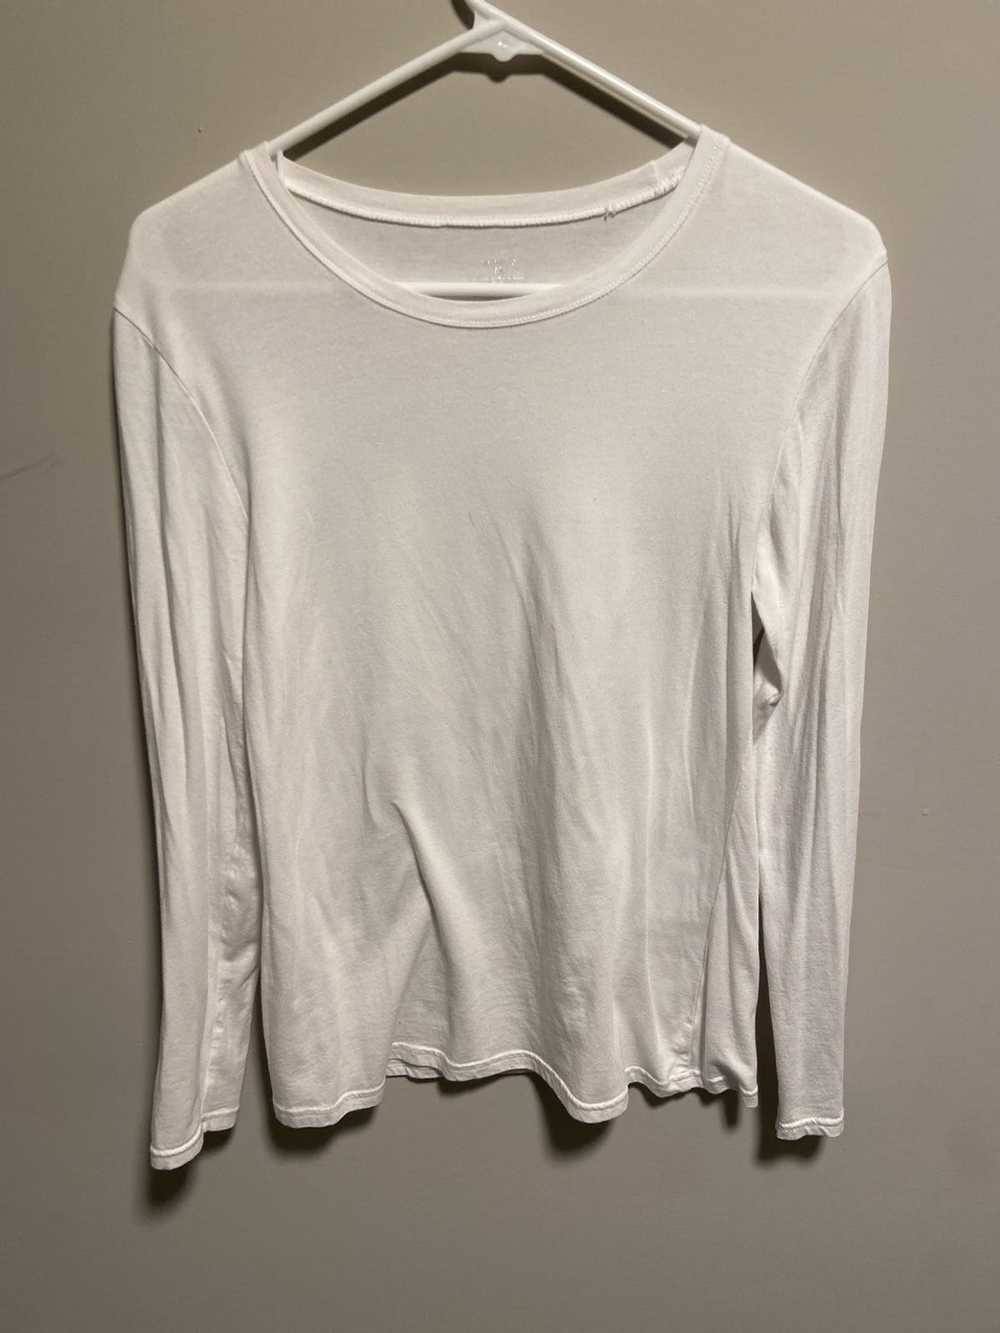 Japanese Brand White mesh shirt - image 1